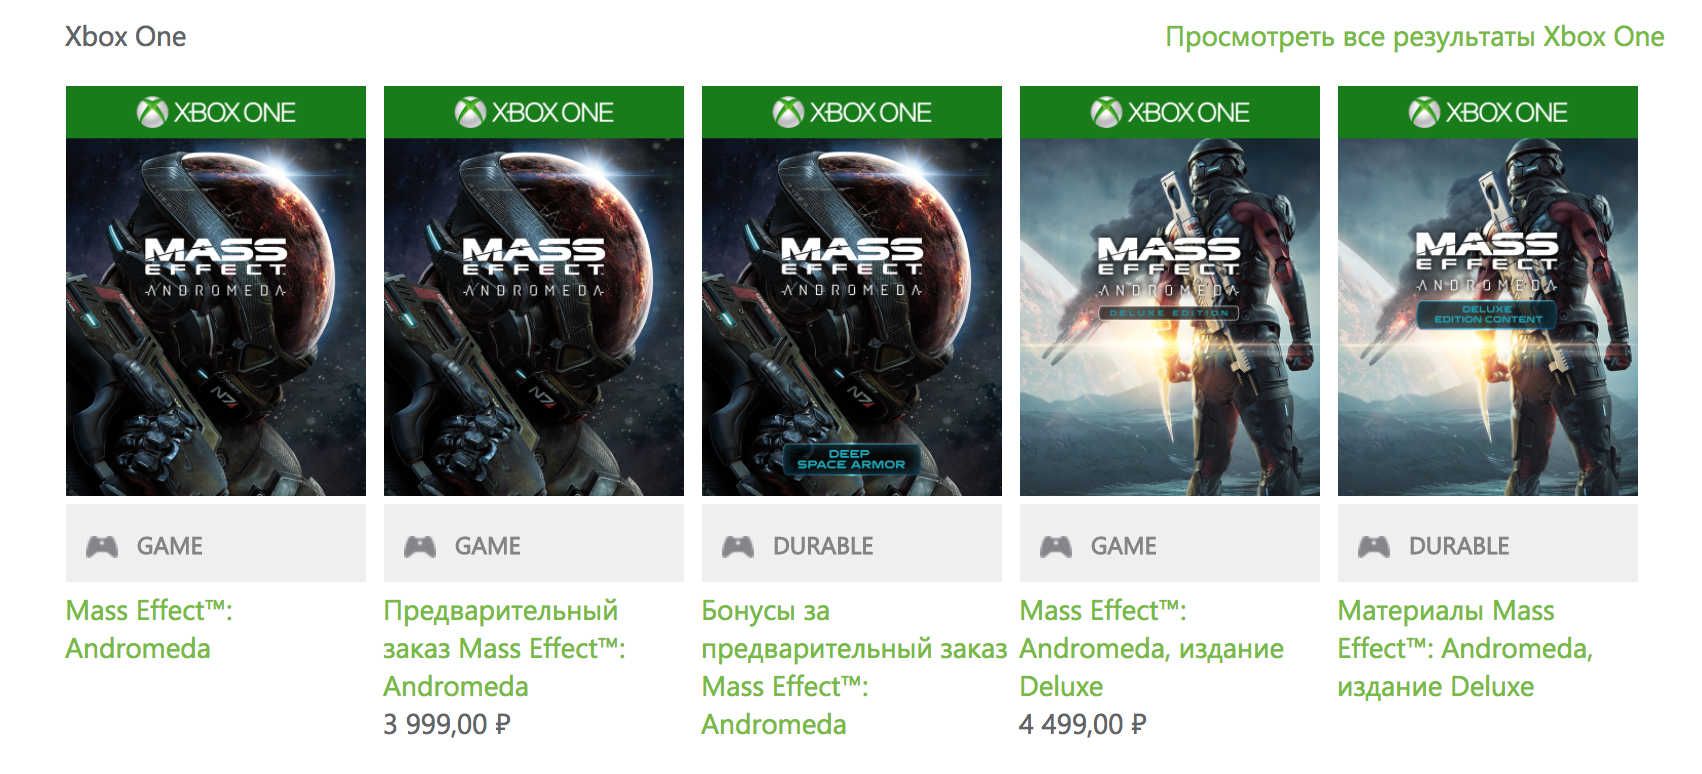 Mass Effect Andromeda обойдется в 4400 рублей на PS4 и 4000 рублей на Xbox One...